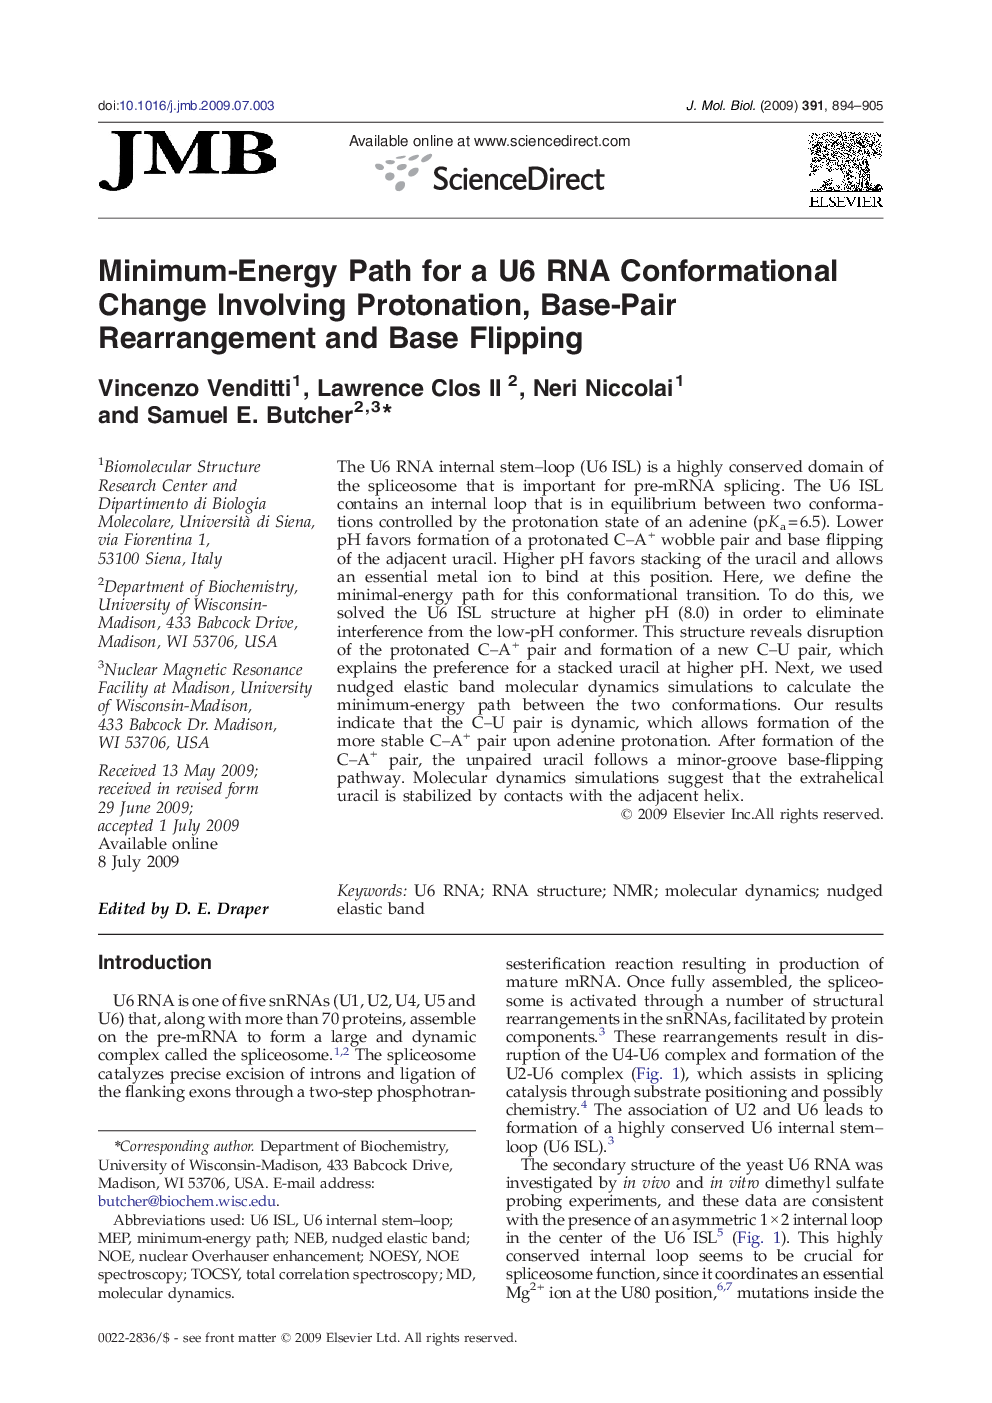 Minimum-Energy Path for a U6 RNA Conformational Change Involving Protonation, Base-Pair Rearrangement and Base Flipping